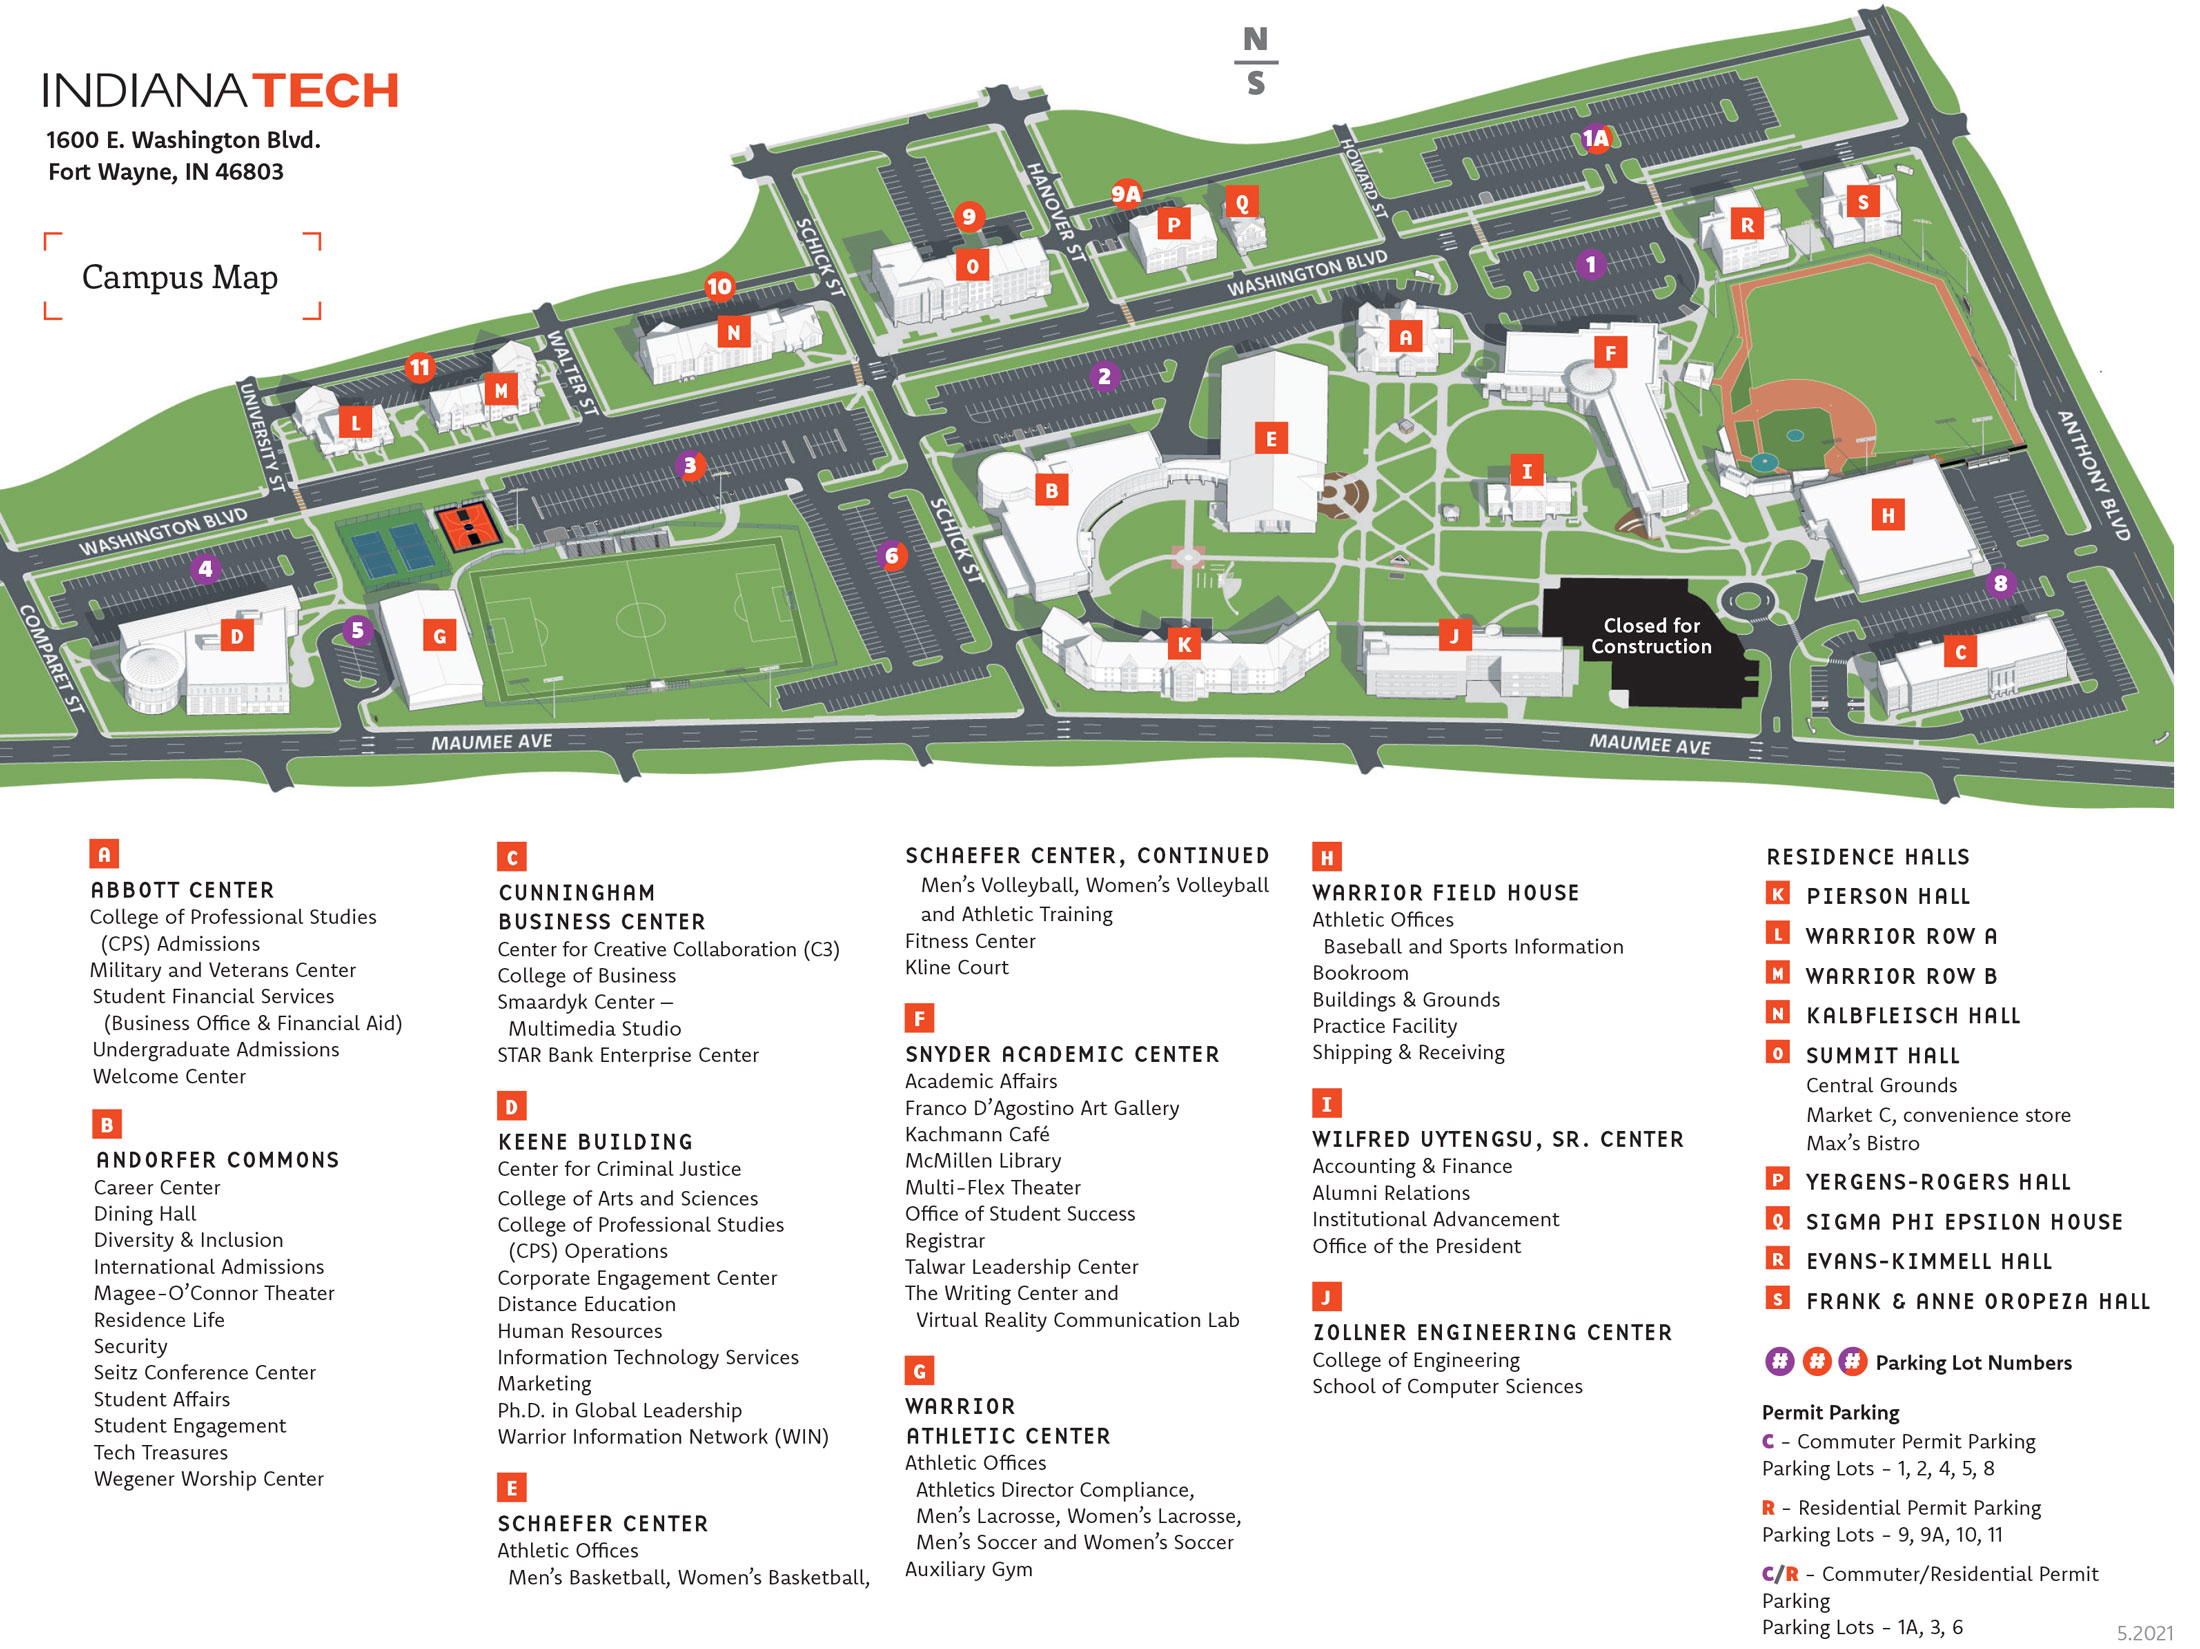 University Of De Campus Map